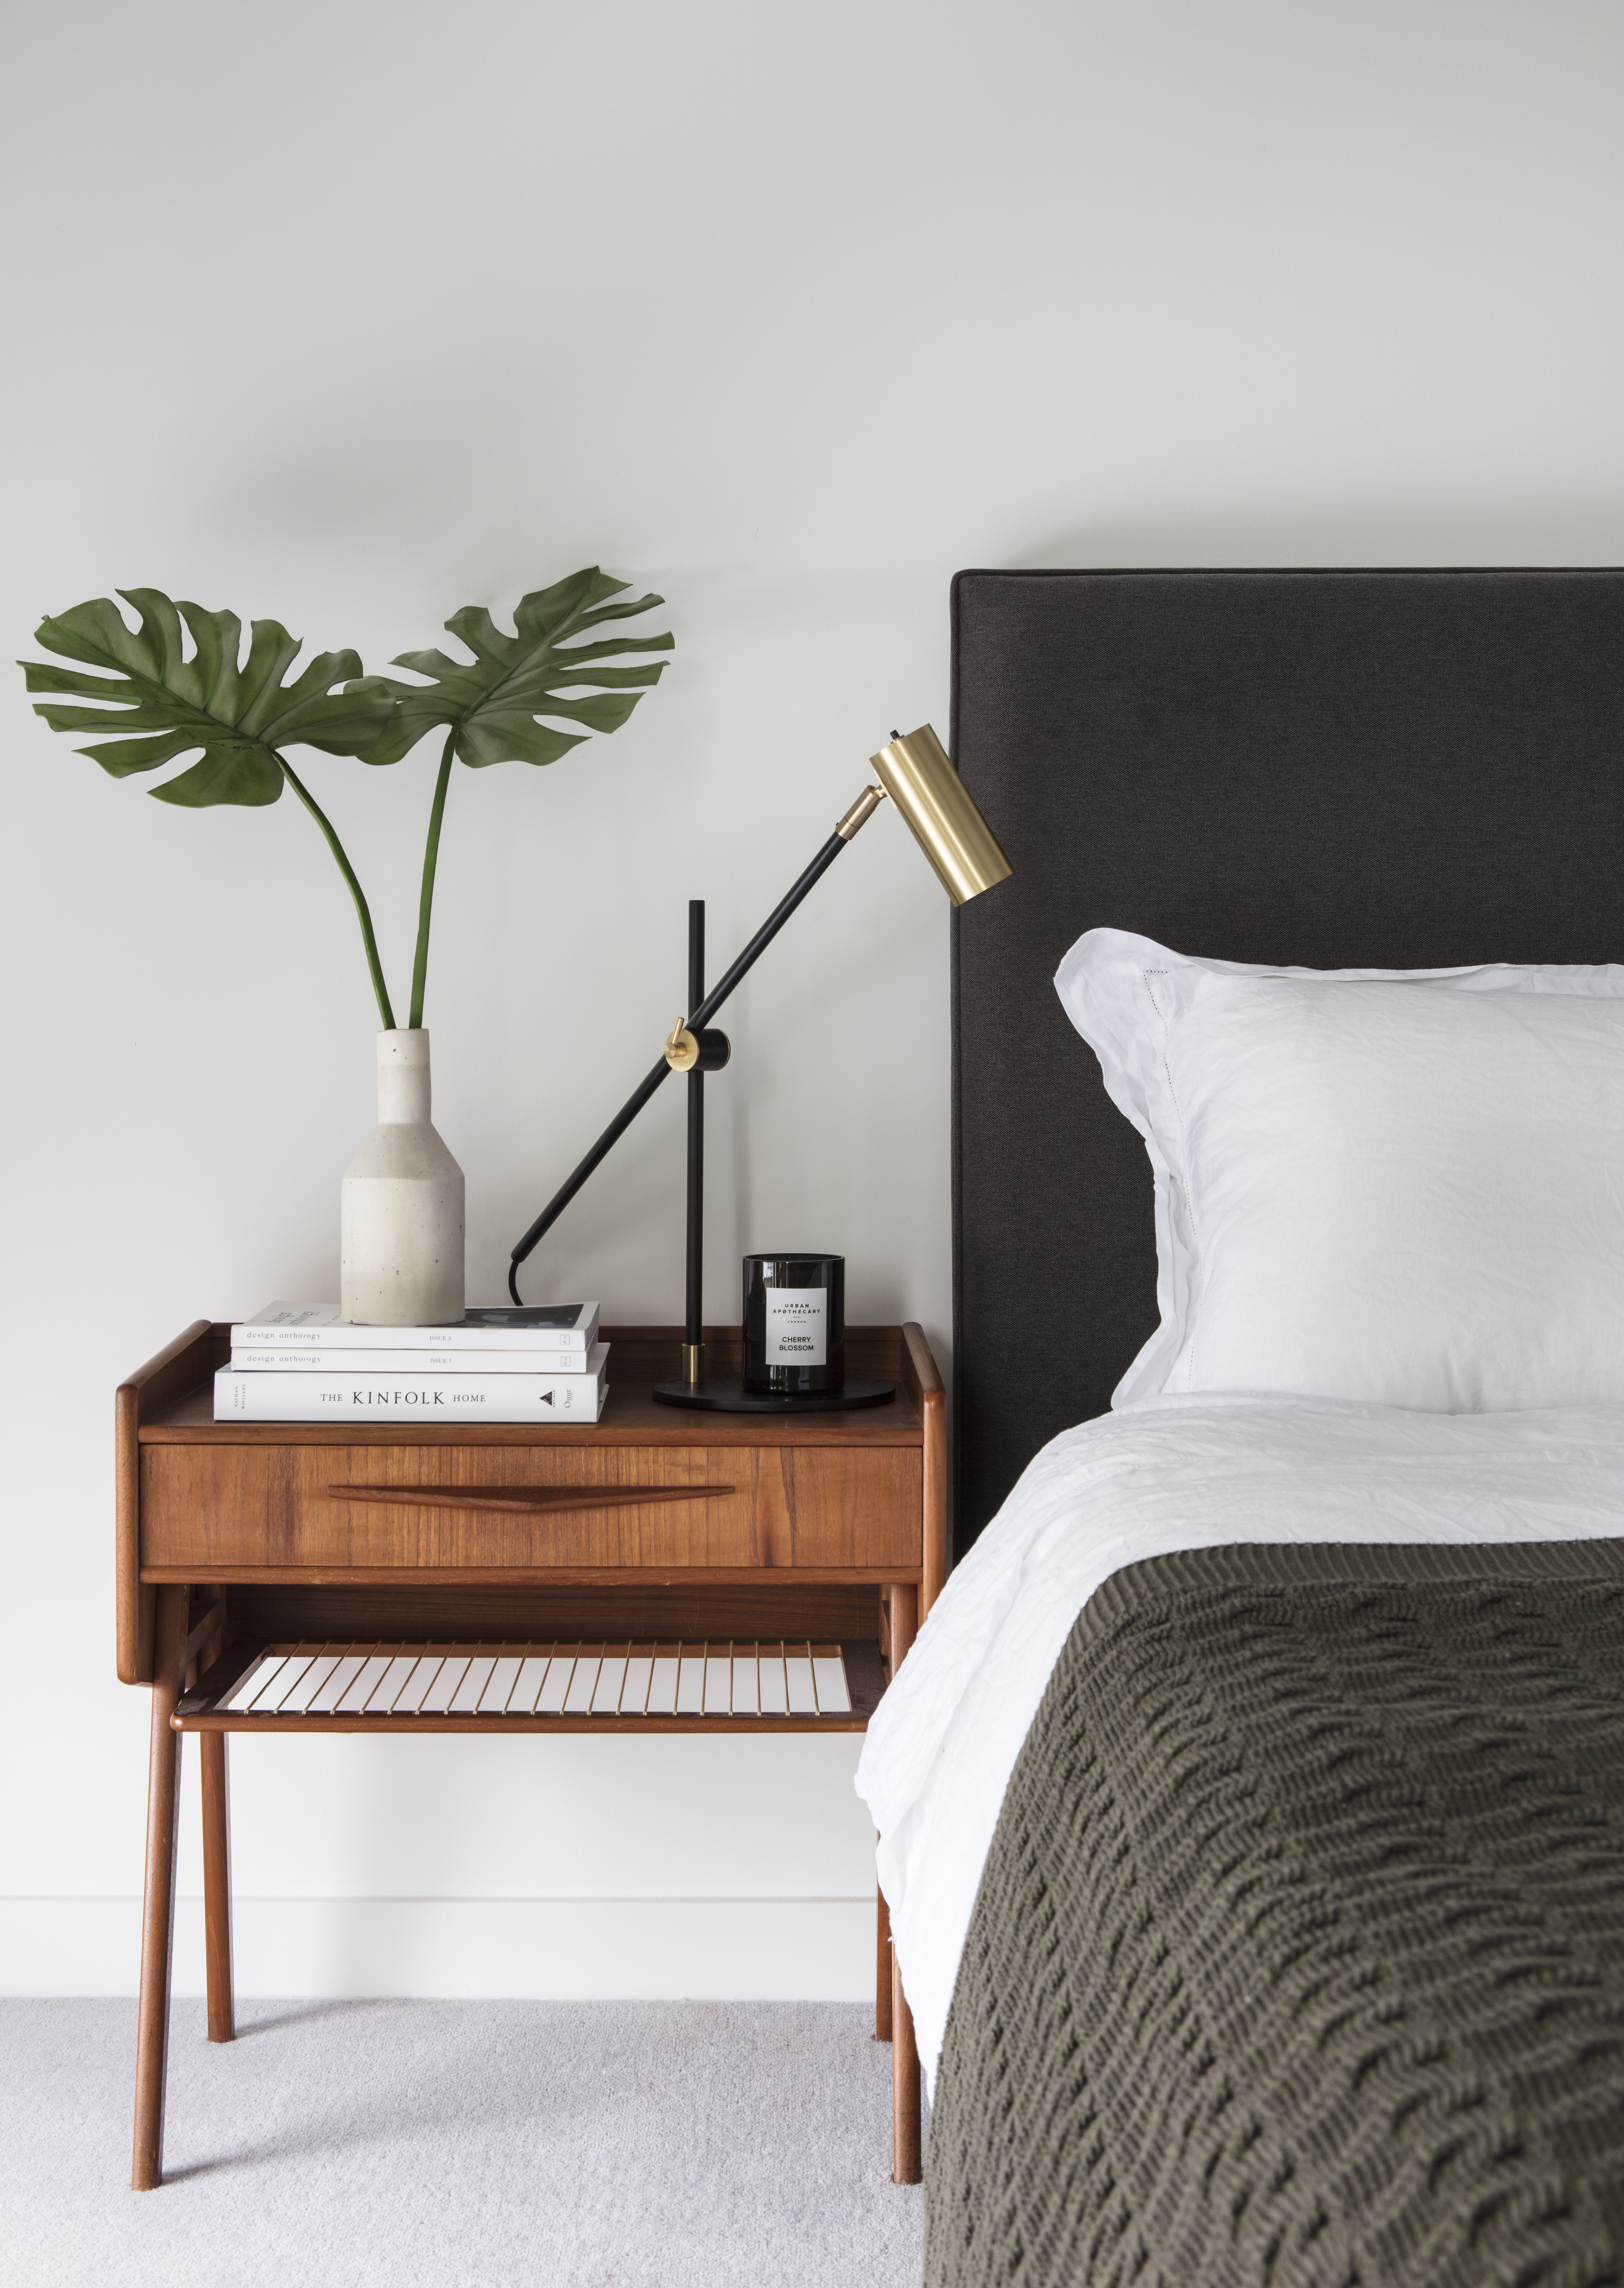 Bed by Margot Tsim Interiors - contemporary interior design in London